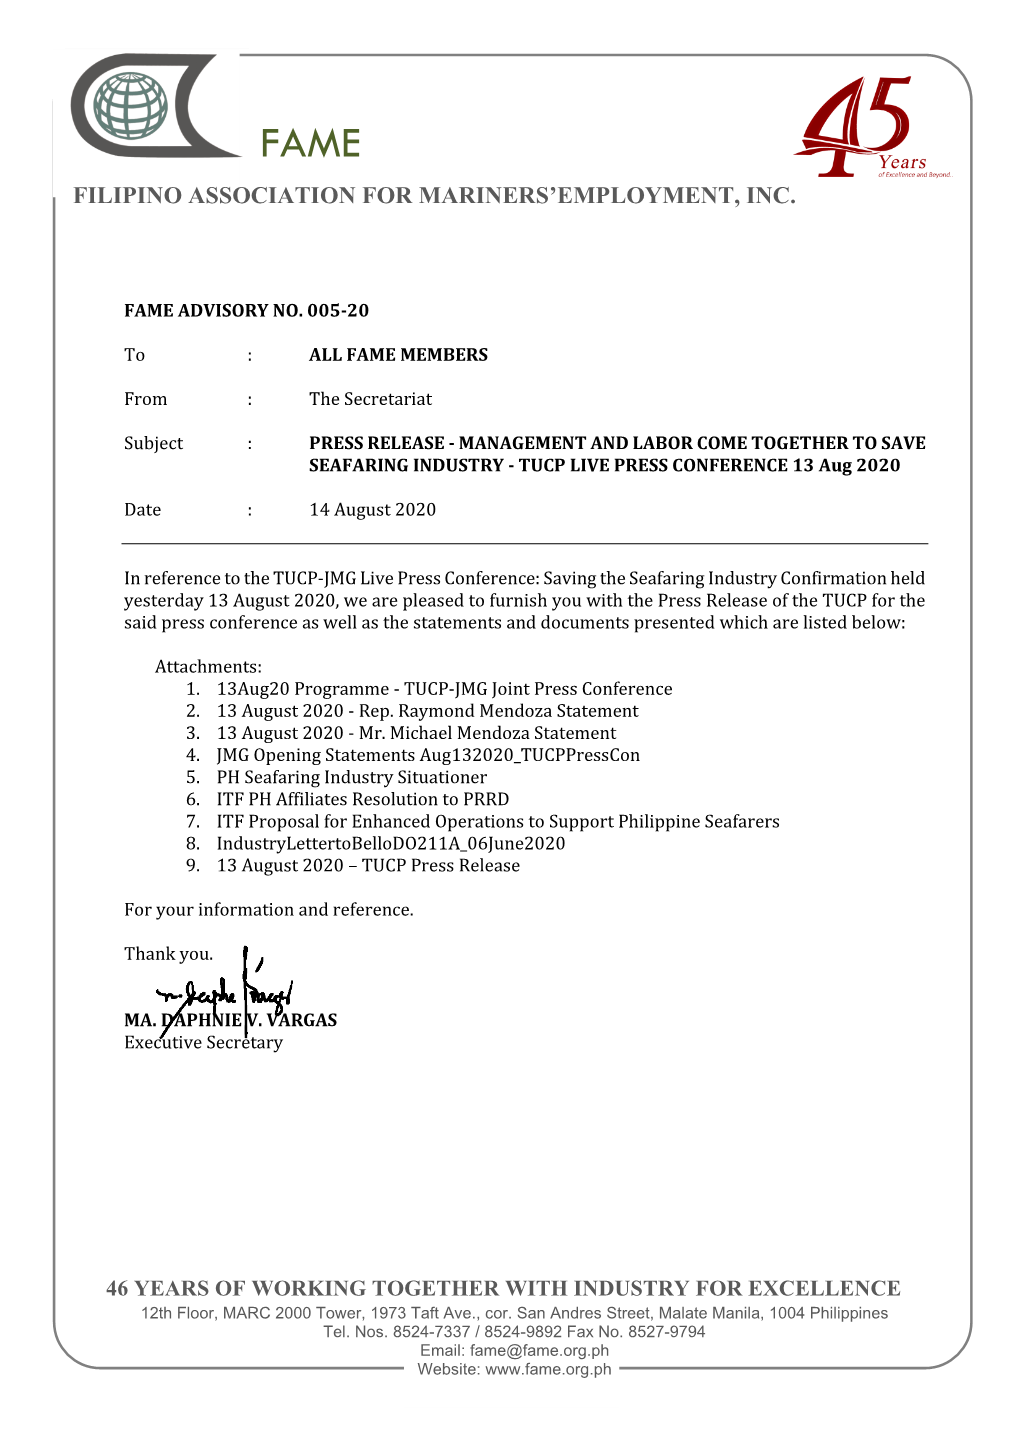 Filipino Association for Mariners' Employment, Inc